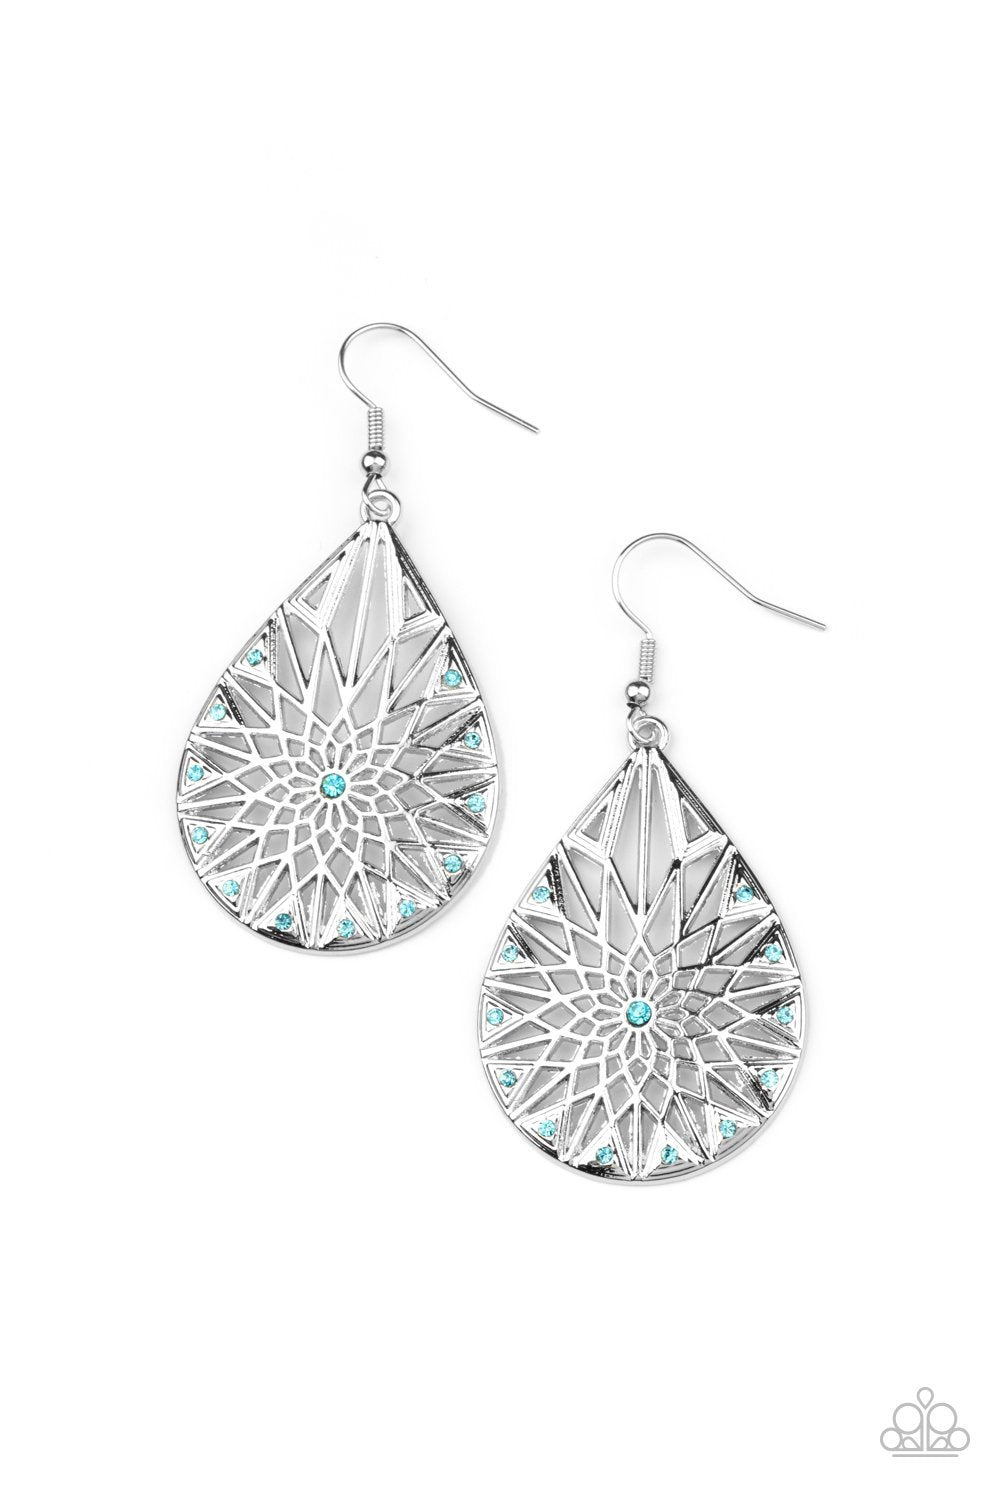 Icy Mosaic Blue Rhinestone Teardrop Earrings - Paparazzi Accessories- lightbox - CarasShop.com - $5 Jewelry by Cara Jewels